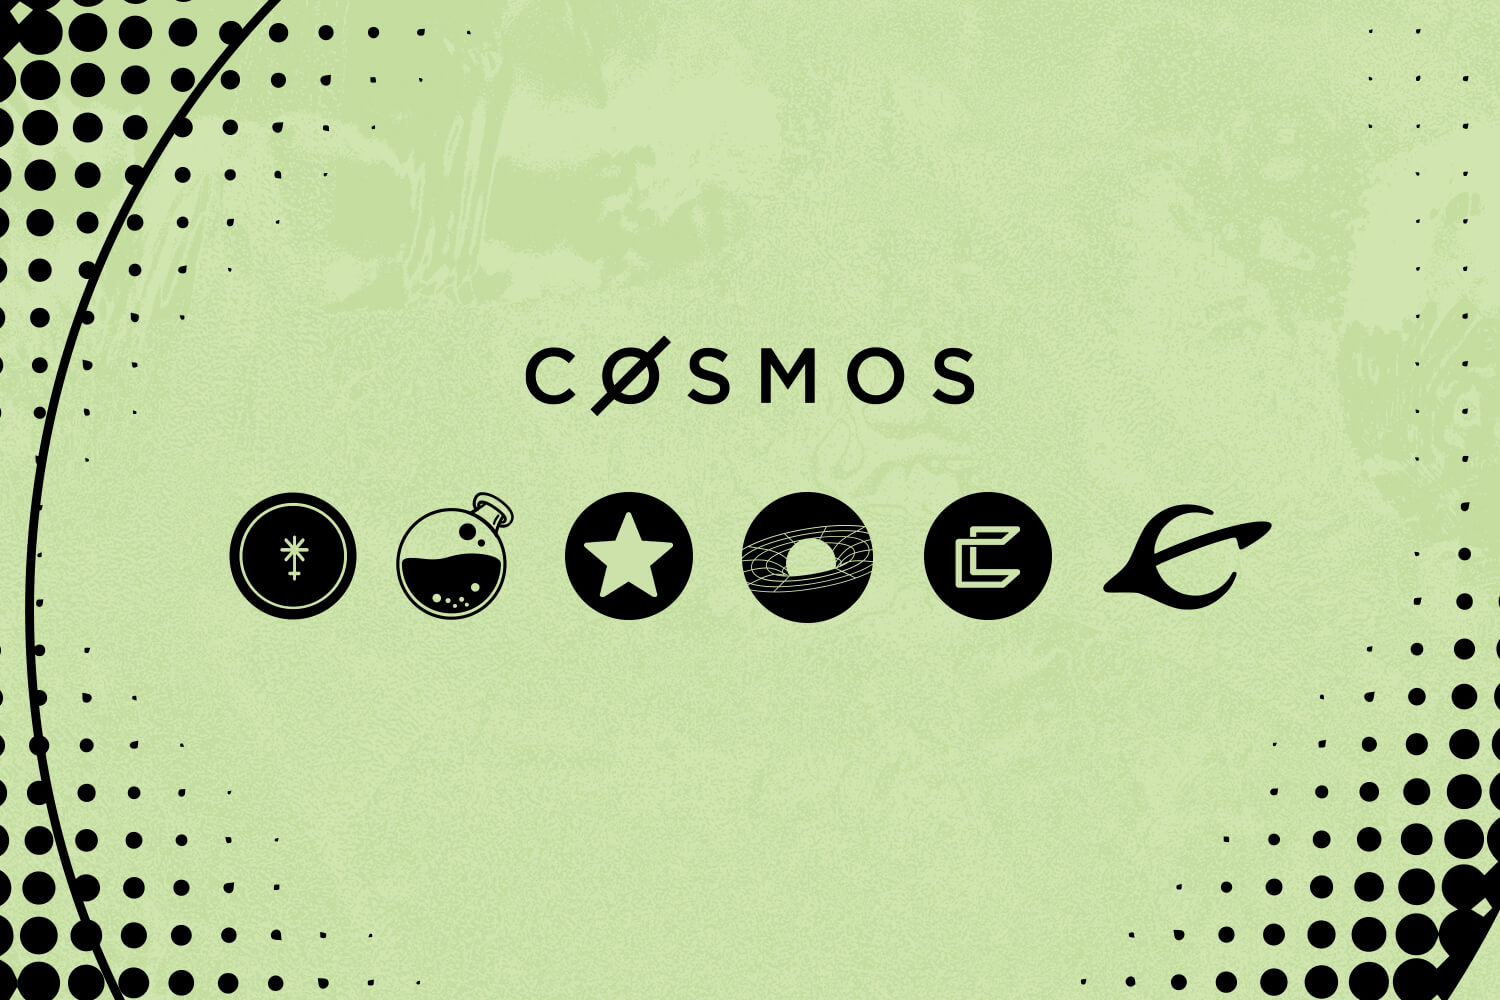 Cosmos Ecosystem